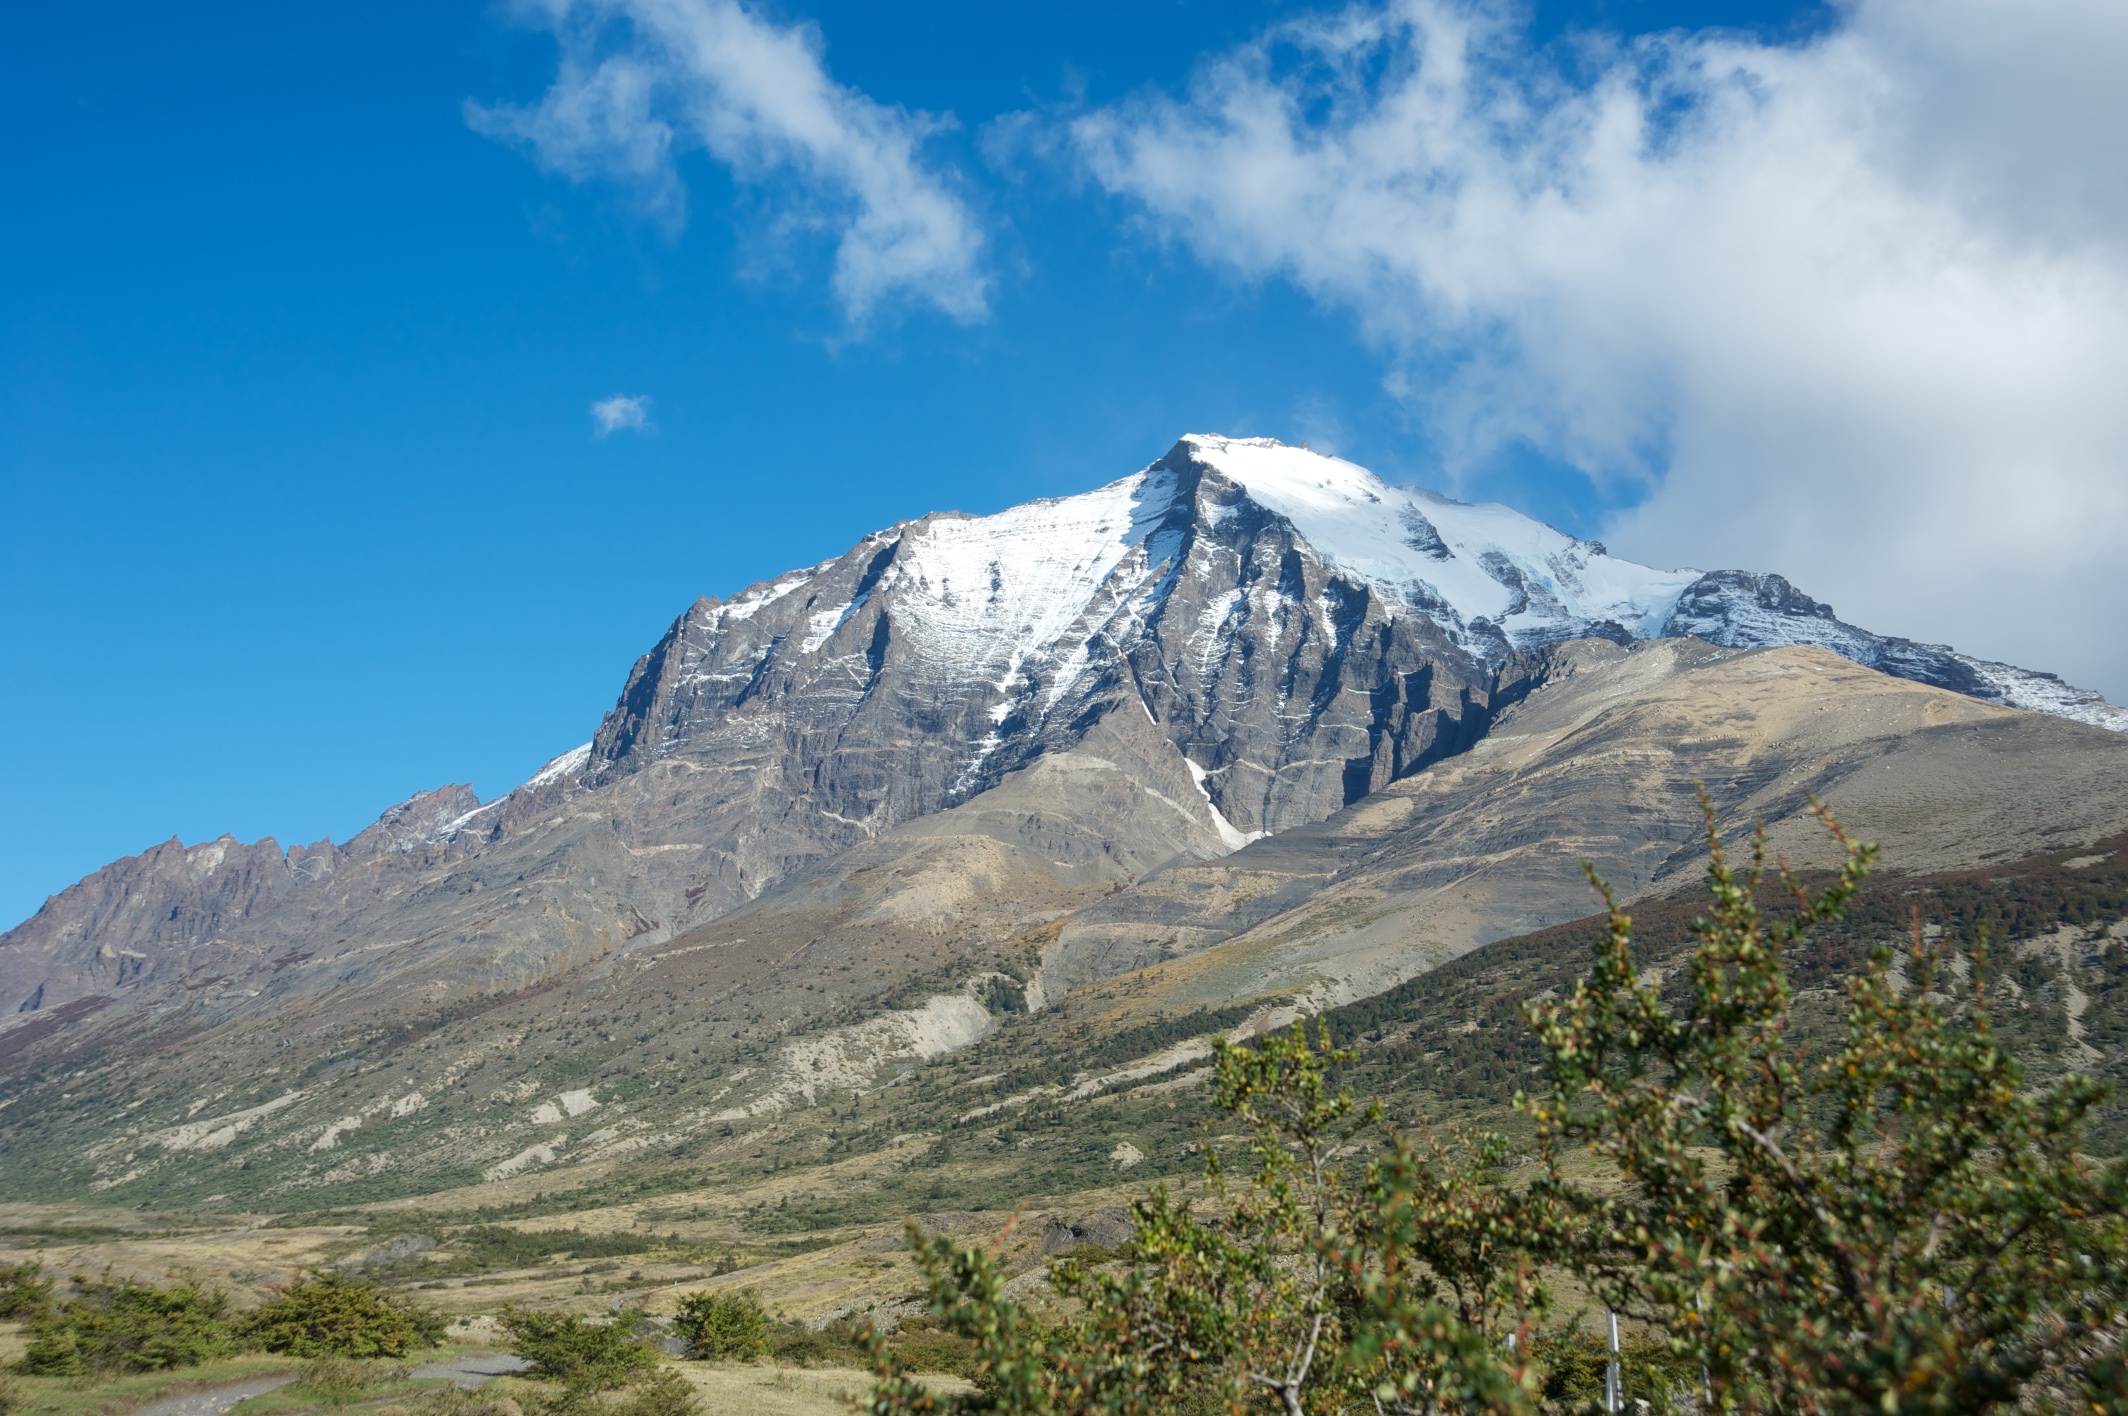  Mountain peak, start of Towers walk, Torres del Paine, Patagonia, Chile 